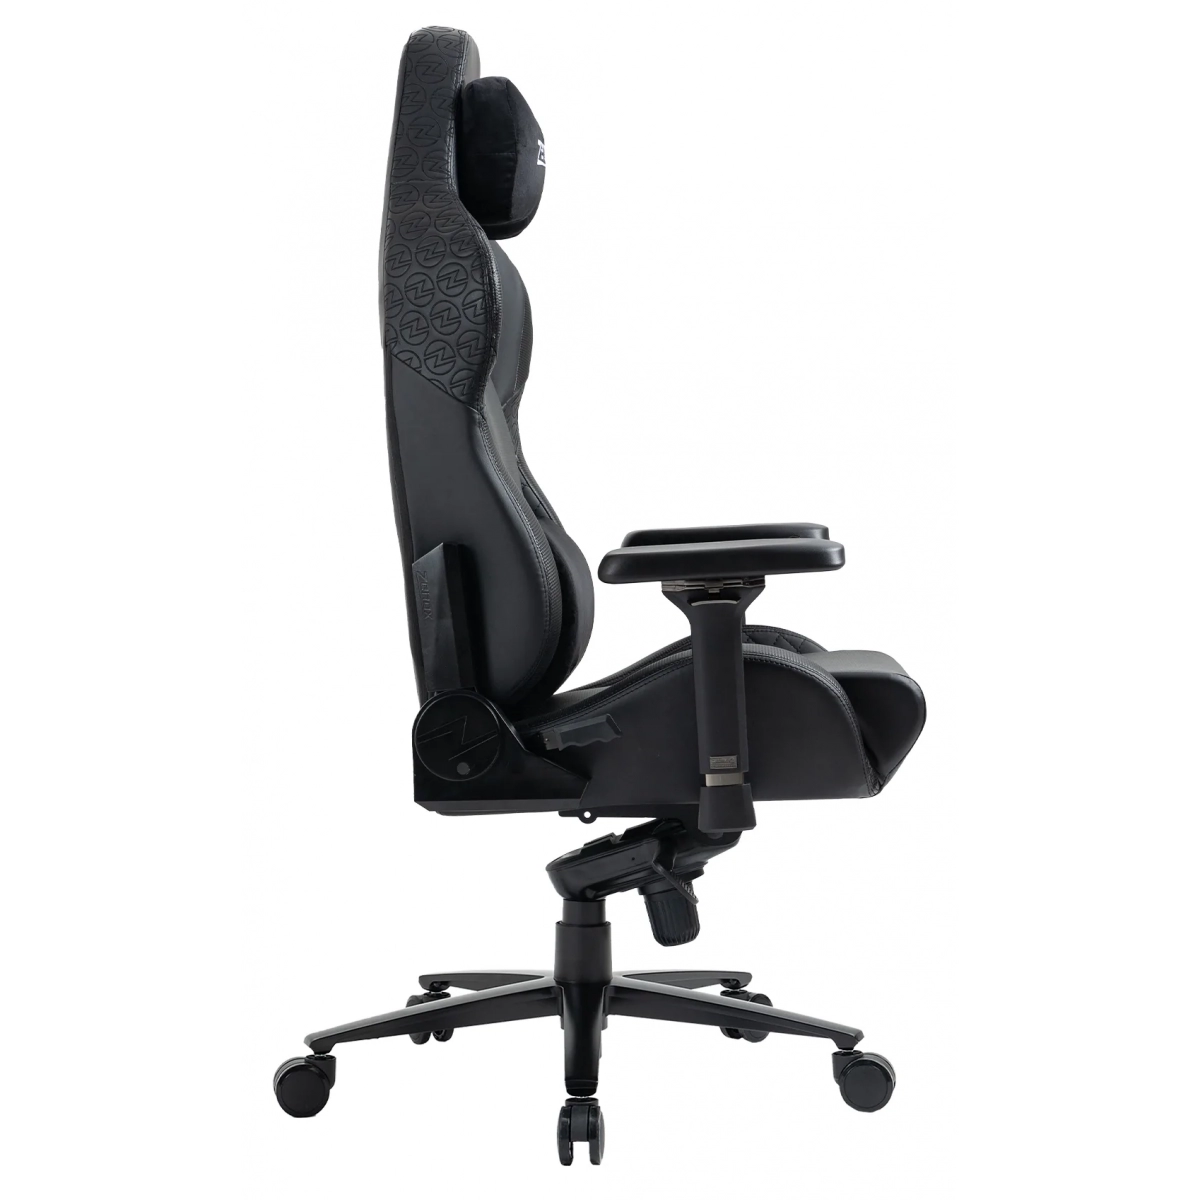 Zenox Jupiter-MK2 Gaming Chair (Leather/Carbon)